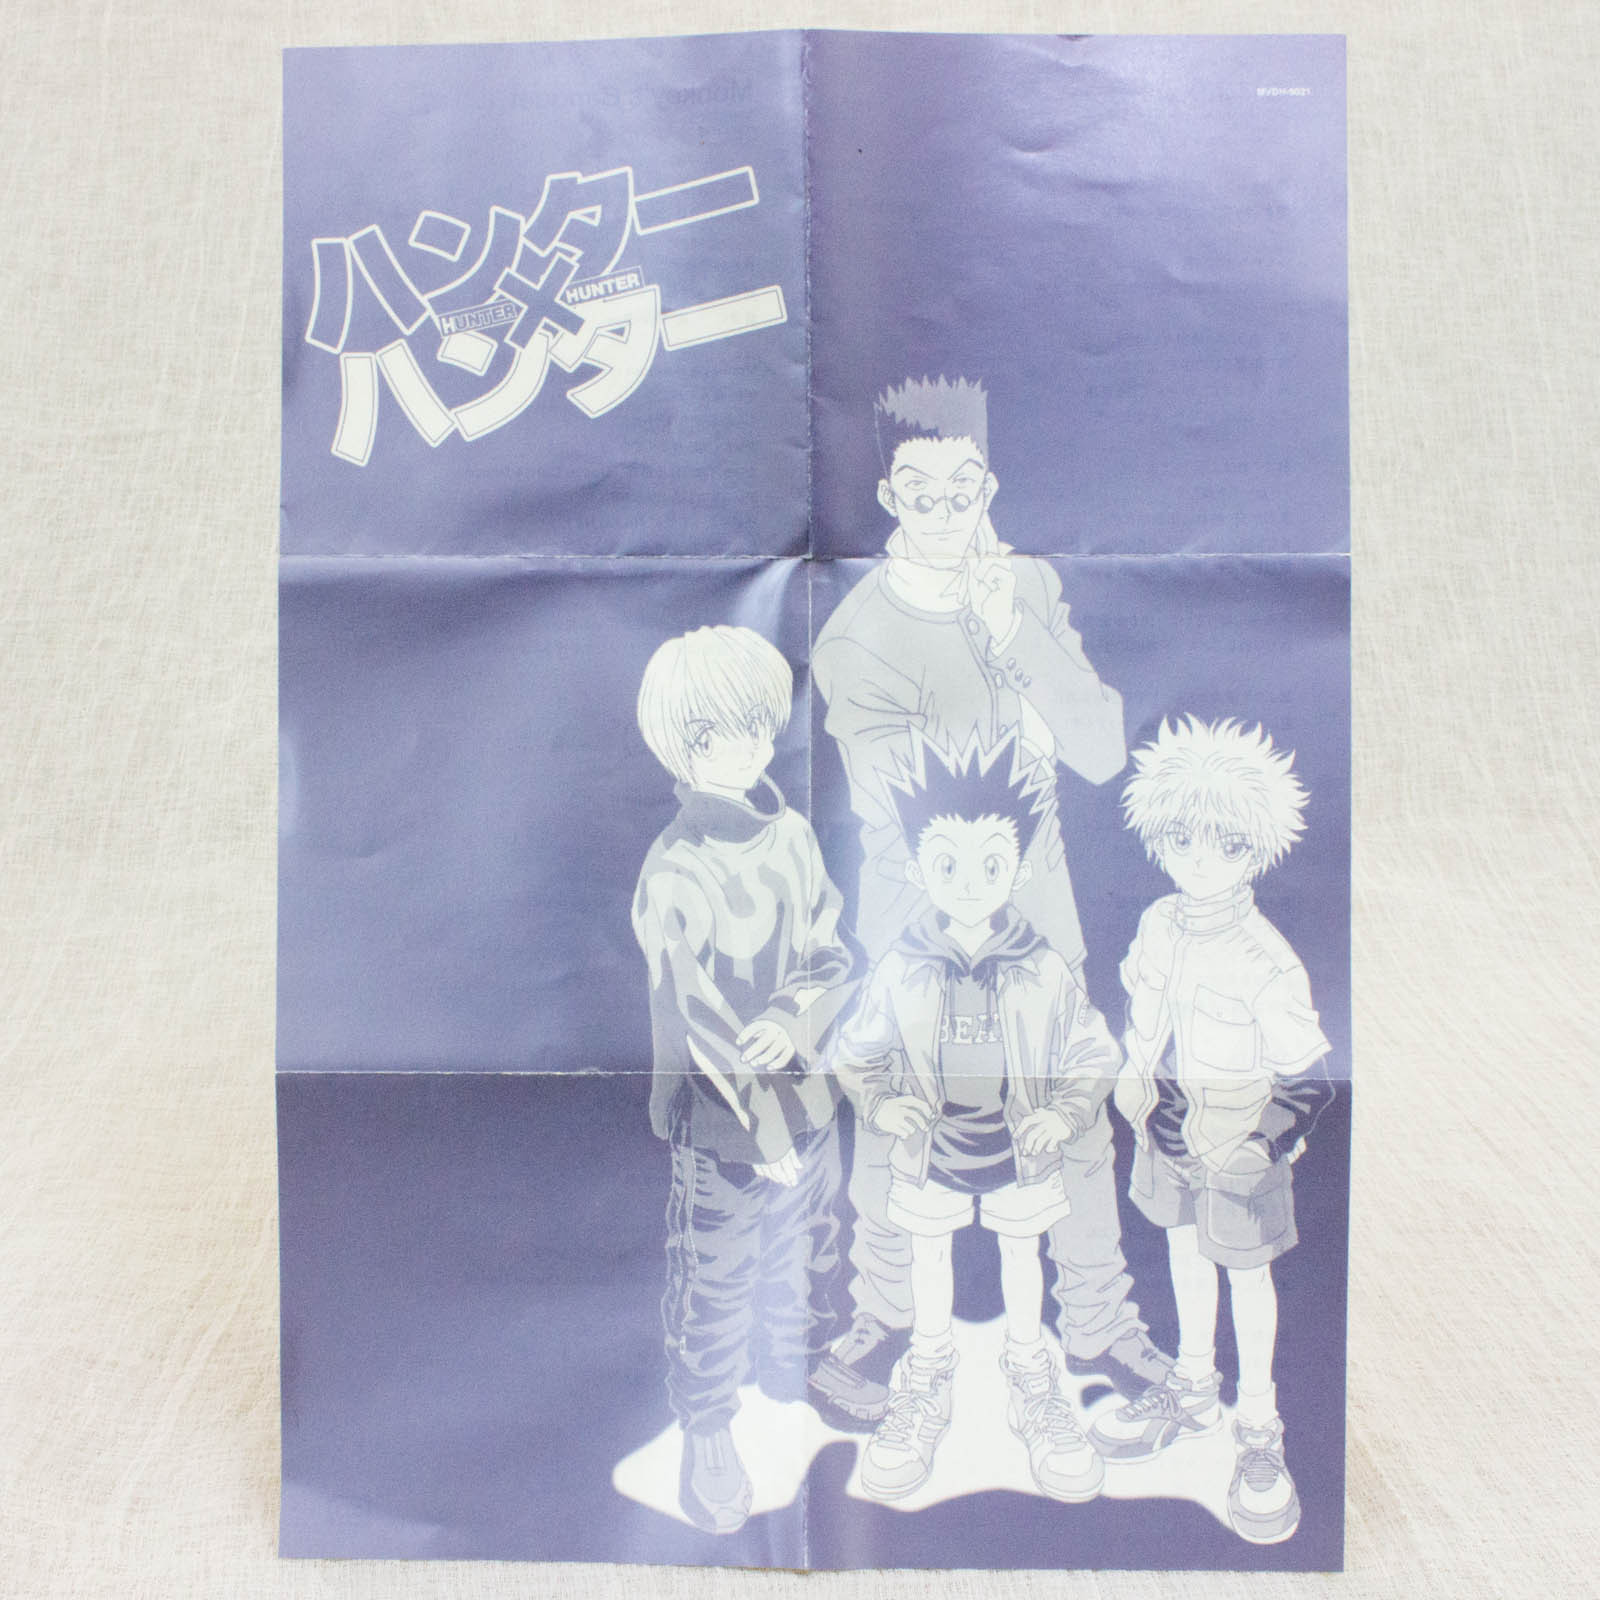 HUNTER x HUNTER Ohayo/Keno 3 Inch (8cm) Single JAPAN ANIME CD